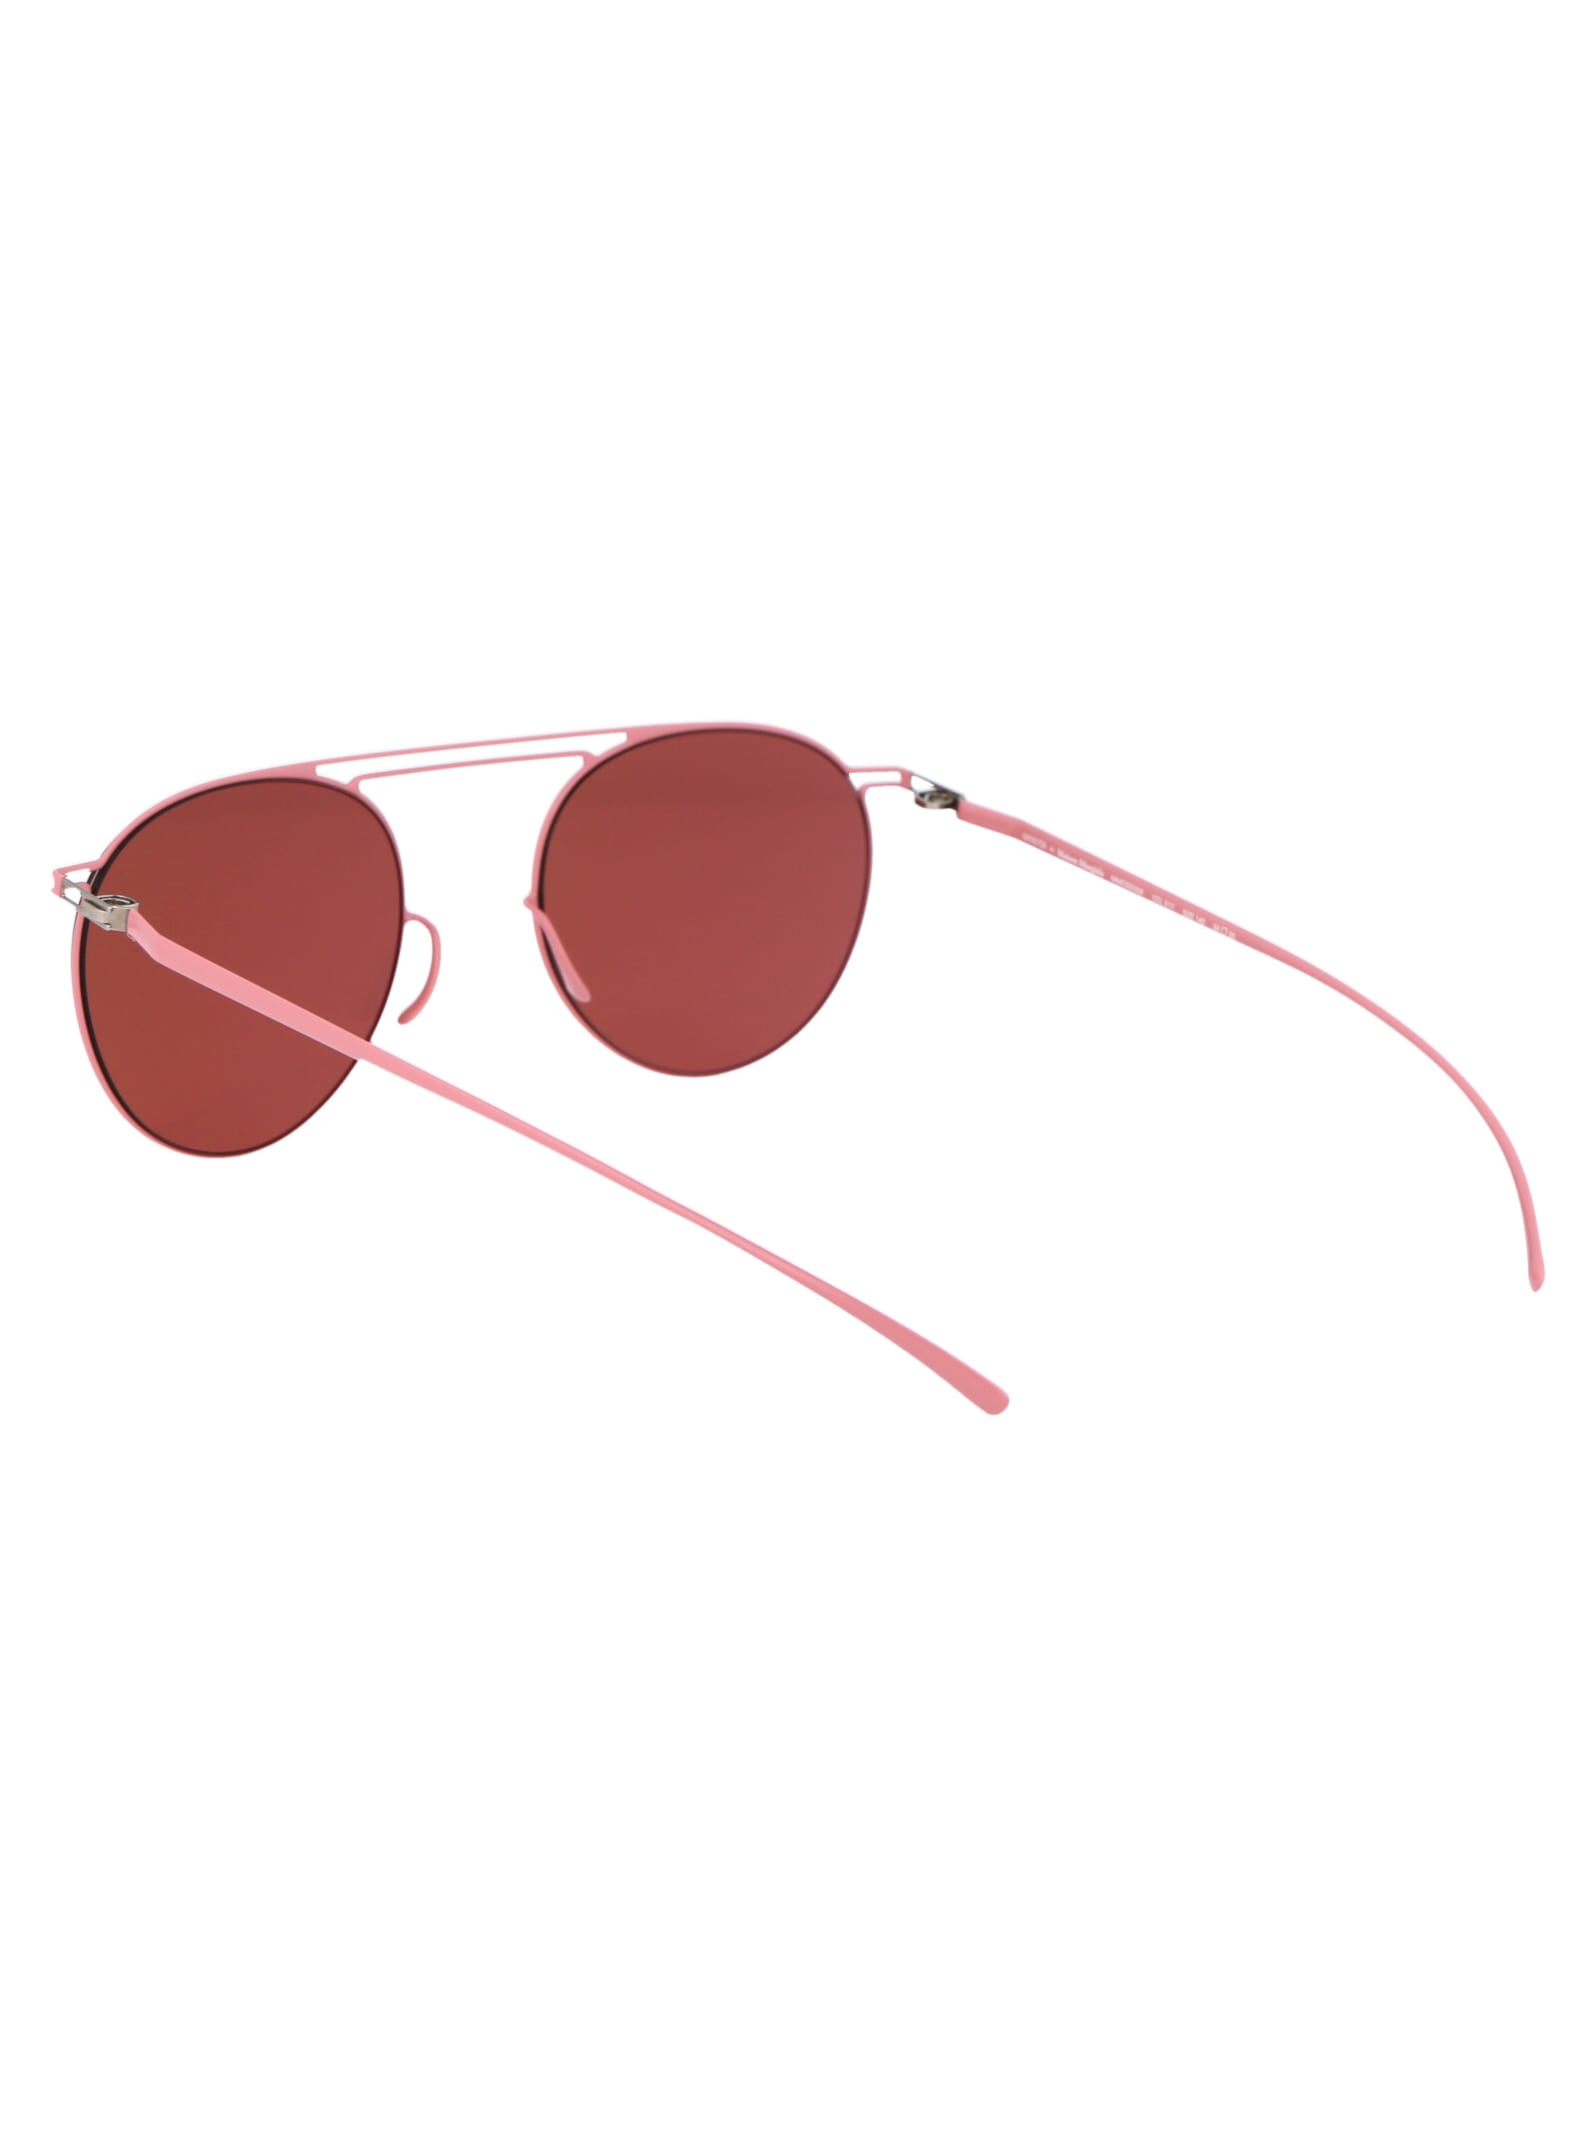 Shop Mykita Mmesse009 Sunglasses In 415 E17 Candy Rose Purple Solid